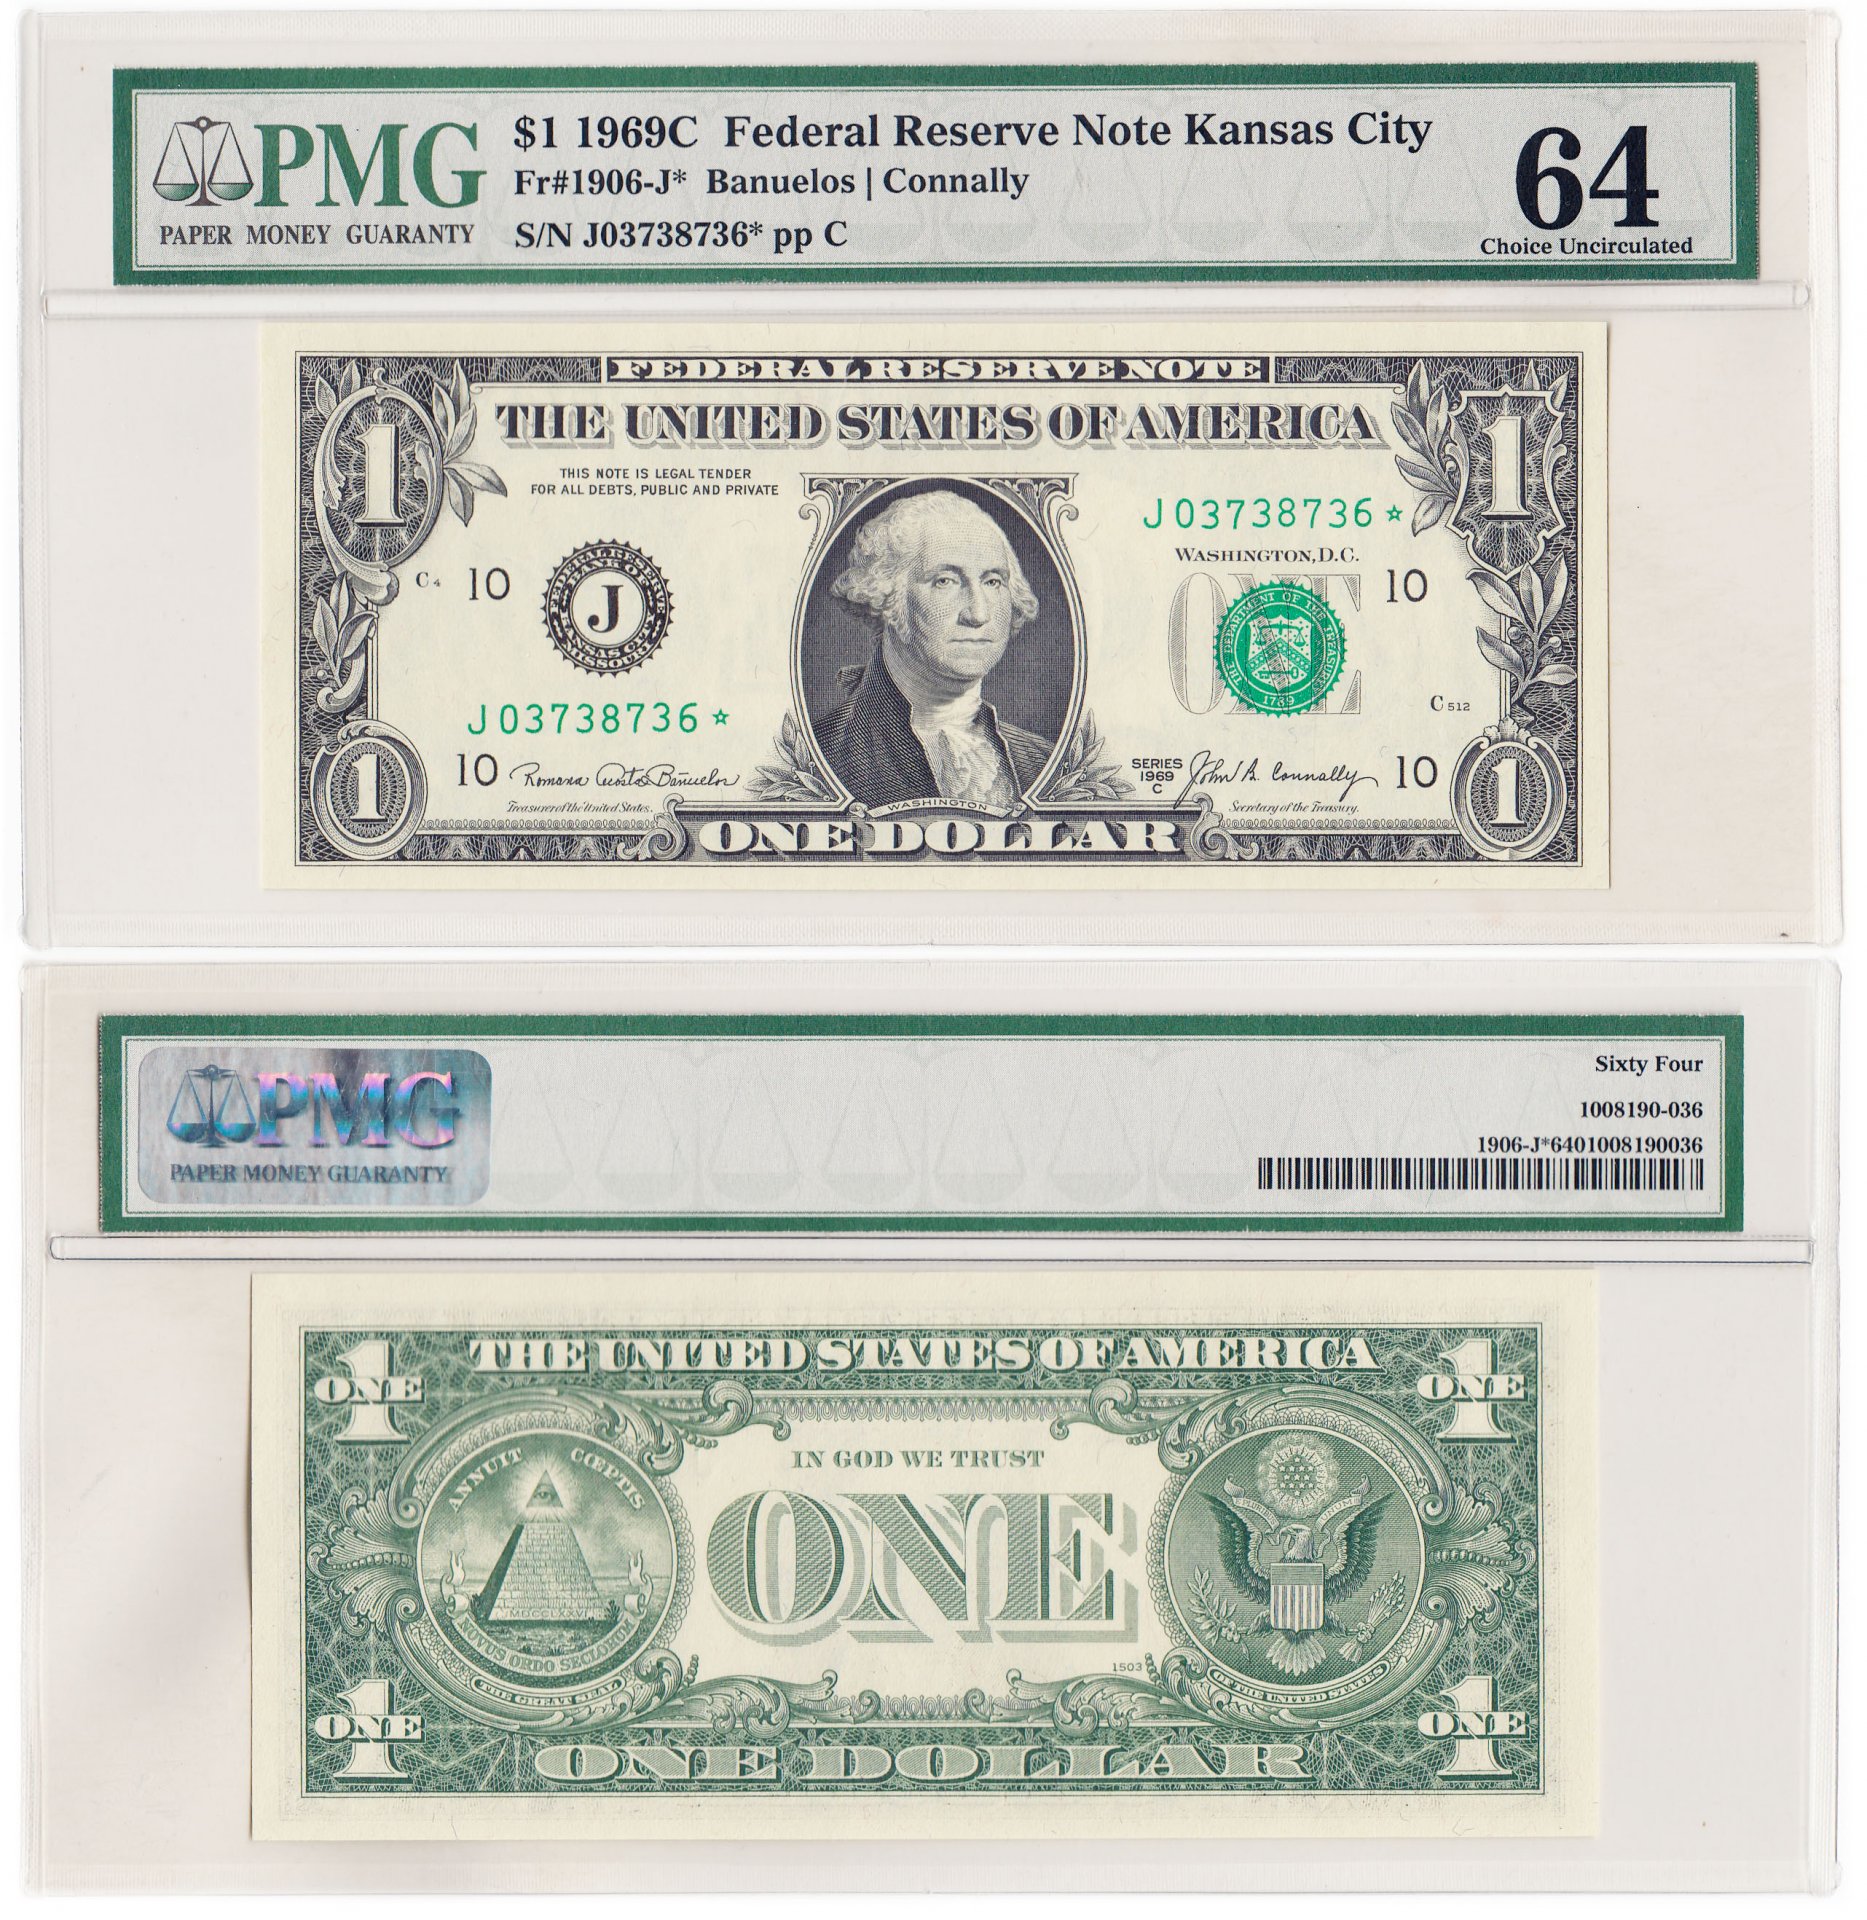 Номинал 1 доллар. Банкнота 1 доллар. Купюра 1 доллар США. Старые банкноты США. Старые купюры долларов.